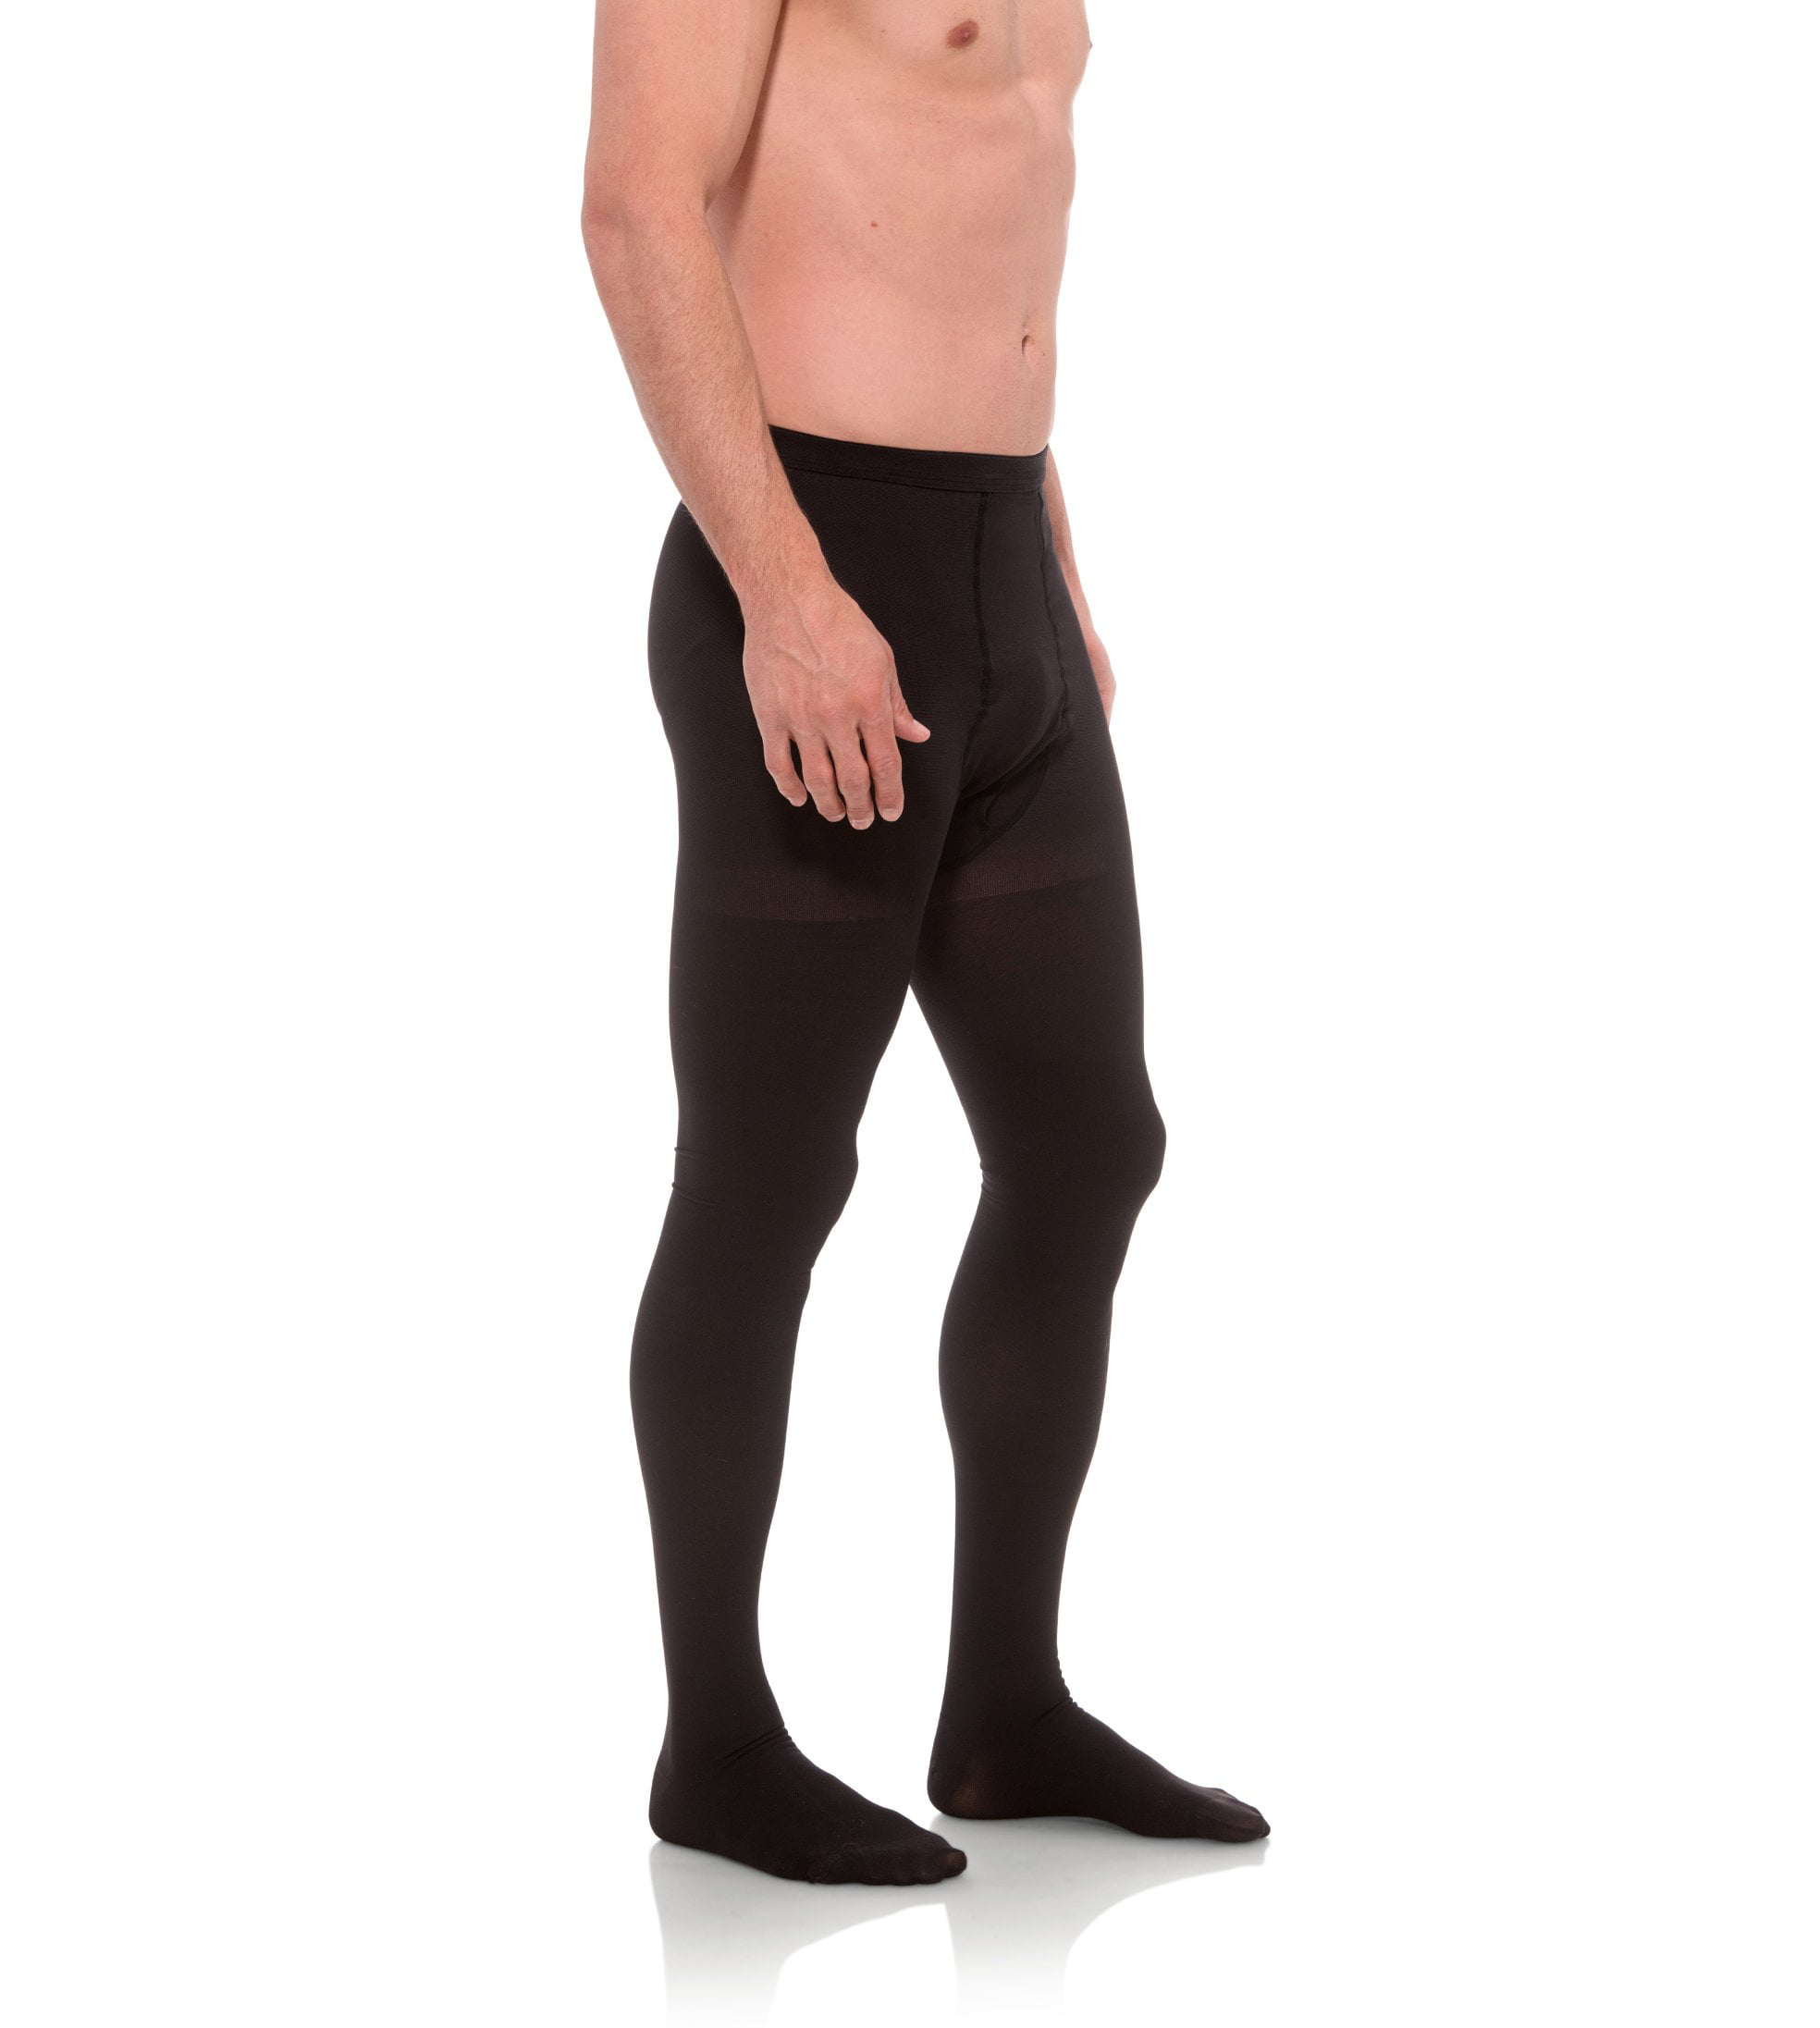 Jomi Compression Men Compression Leotard Pantyhose, 260 (Medium, Black) - Walmart.com